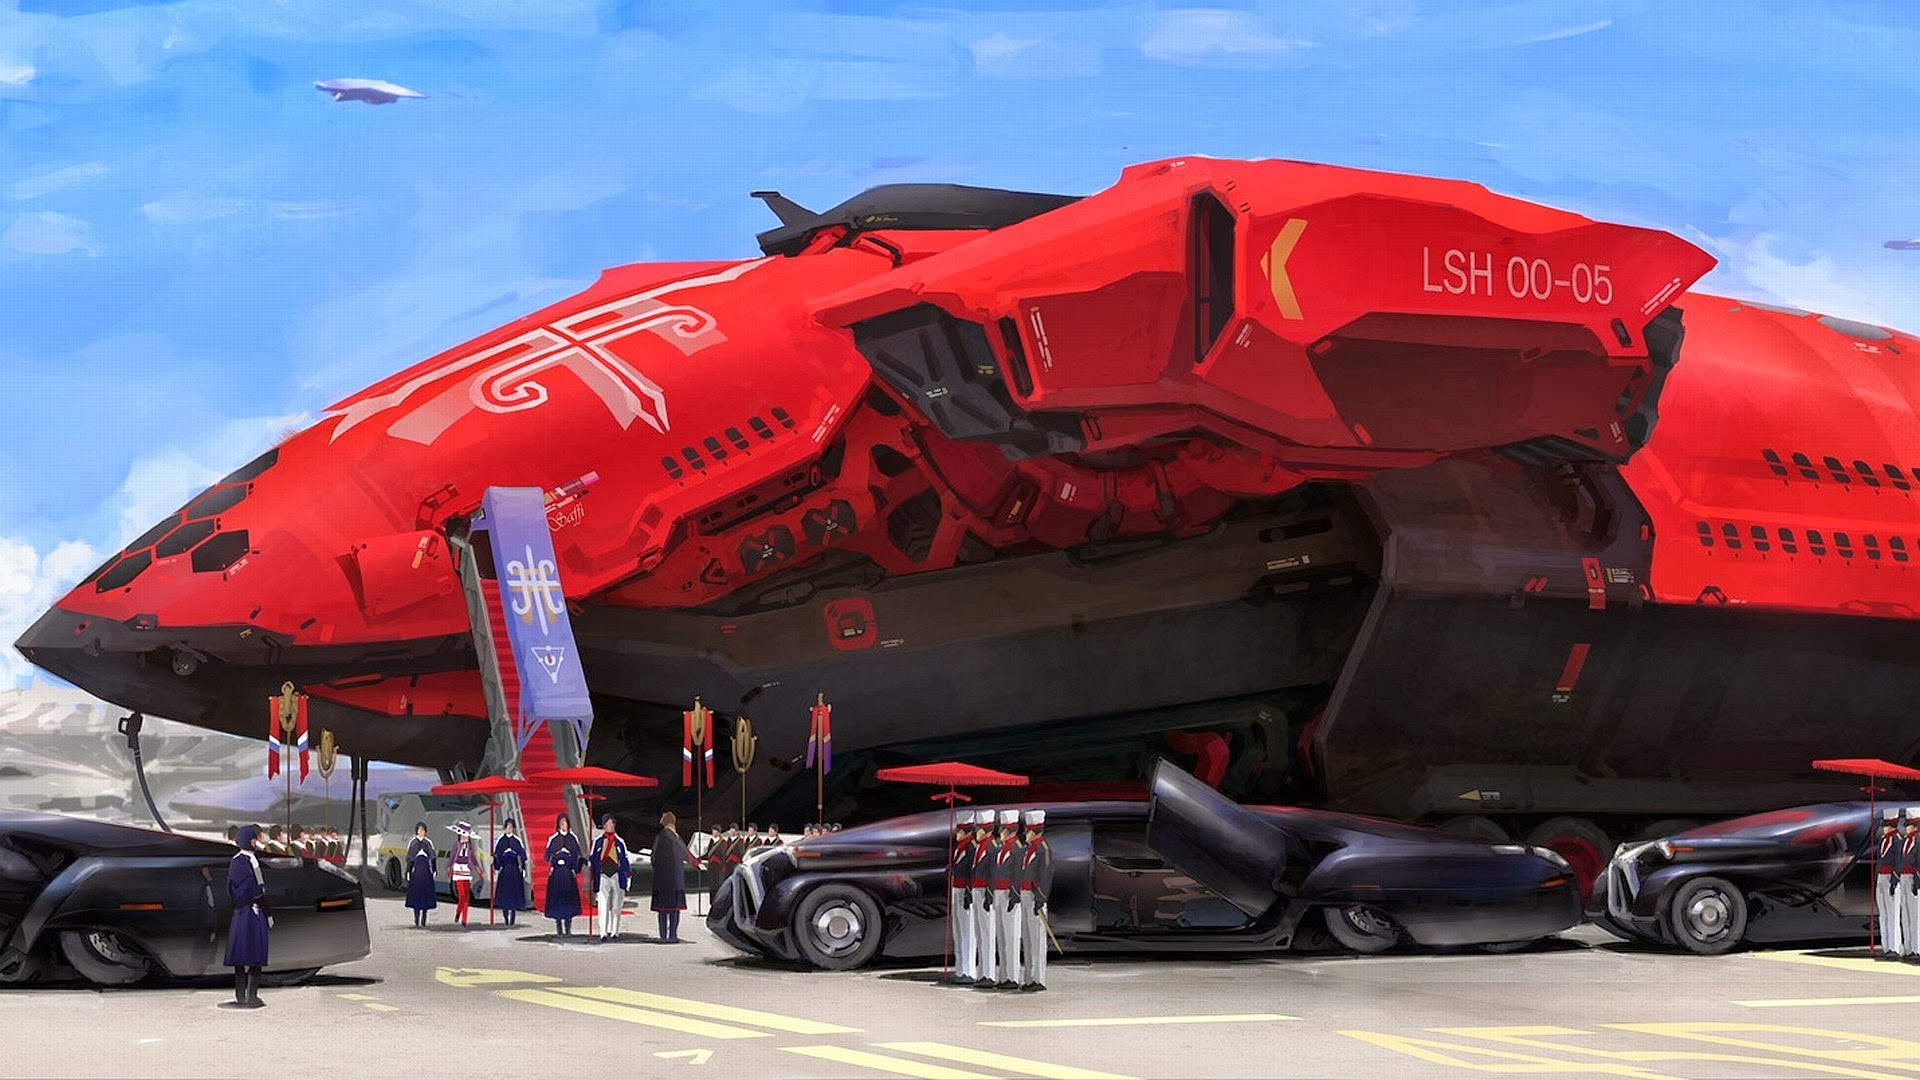 General 1920x1080 digital art science fiction vehicle artwork car spaceship futuristic